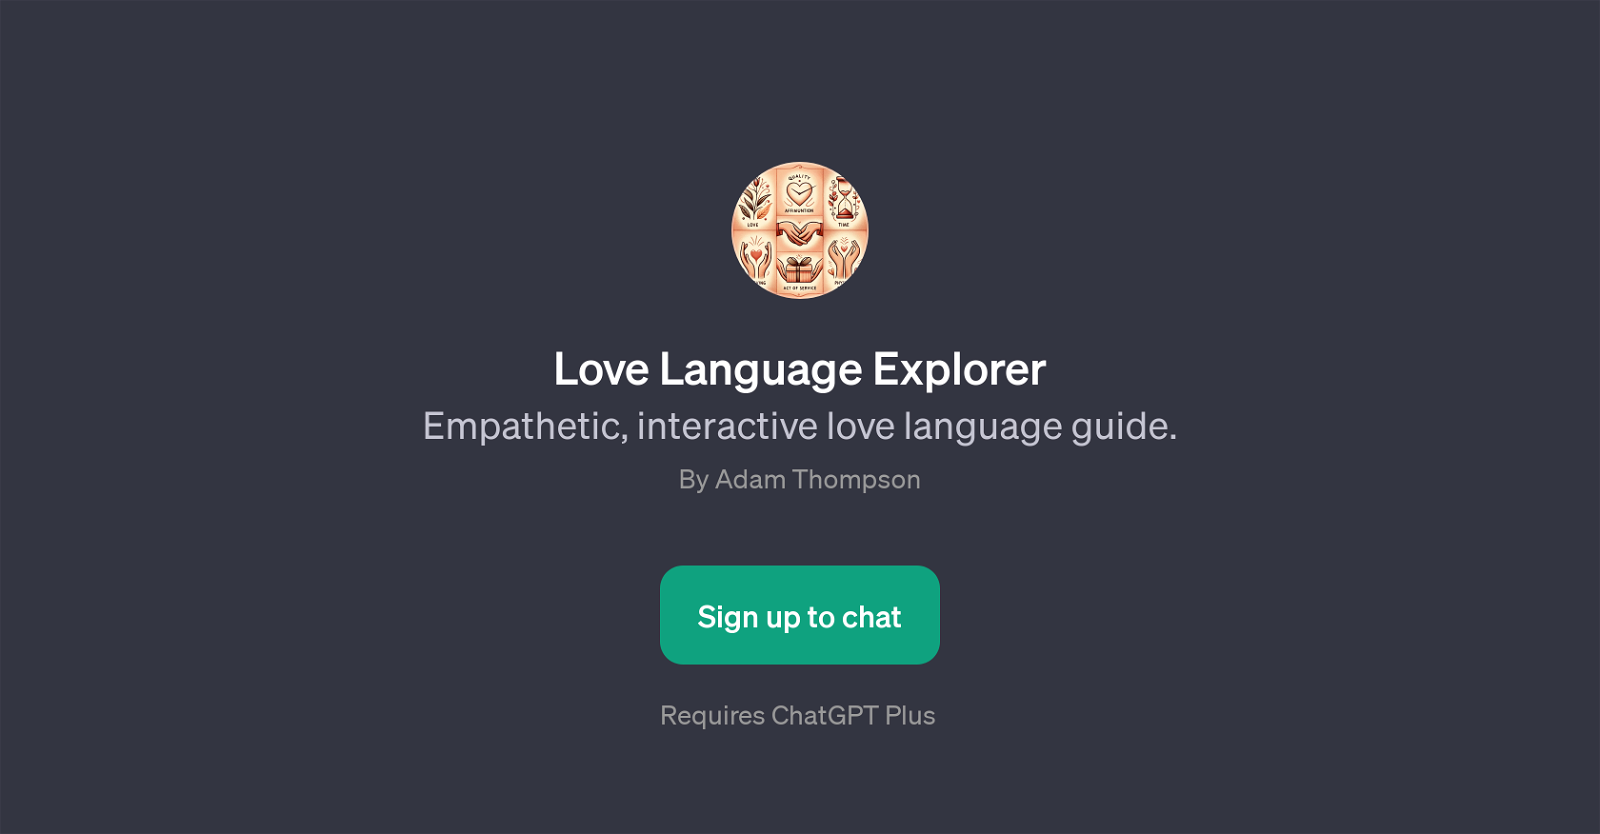 Love Language Explorer website